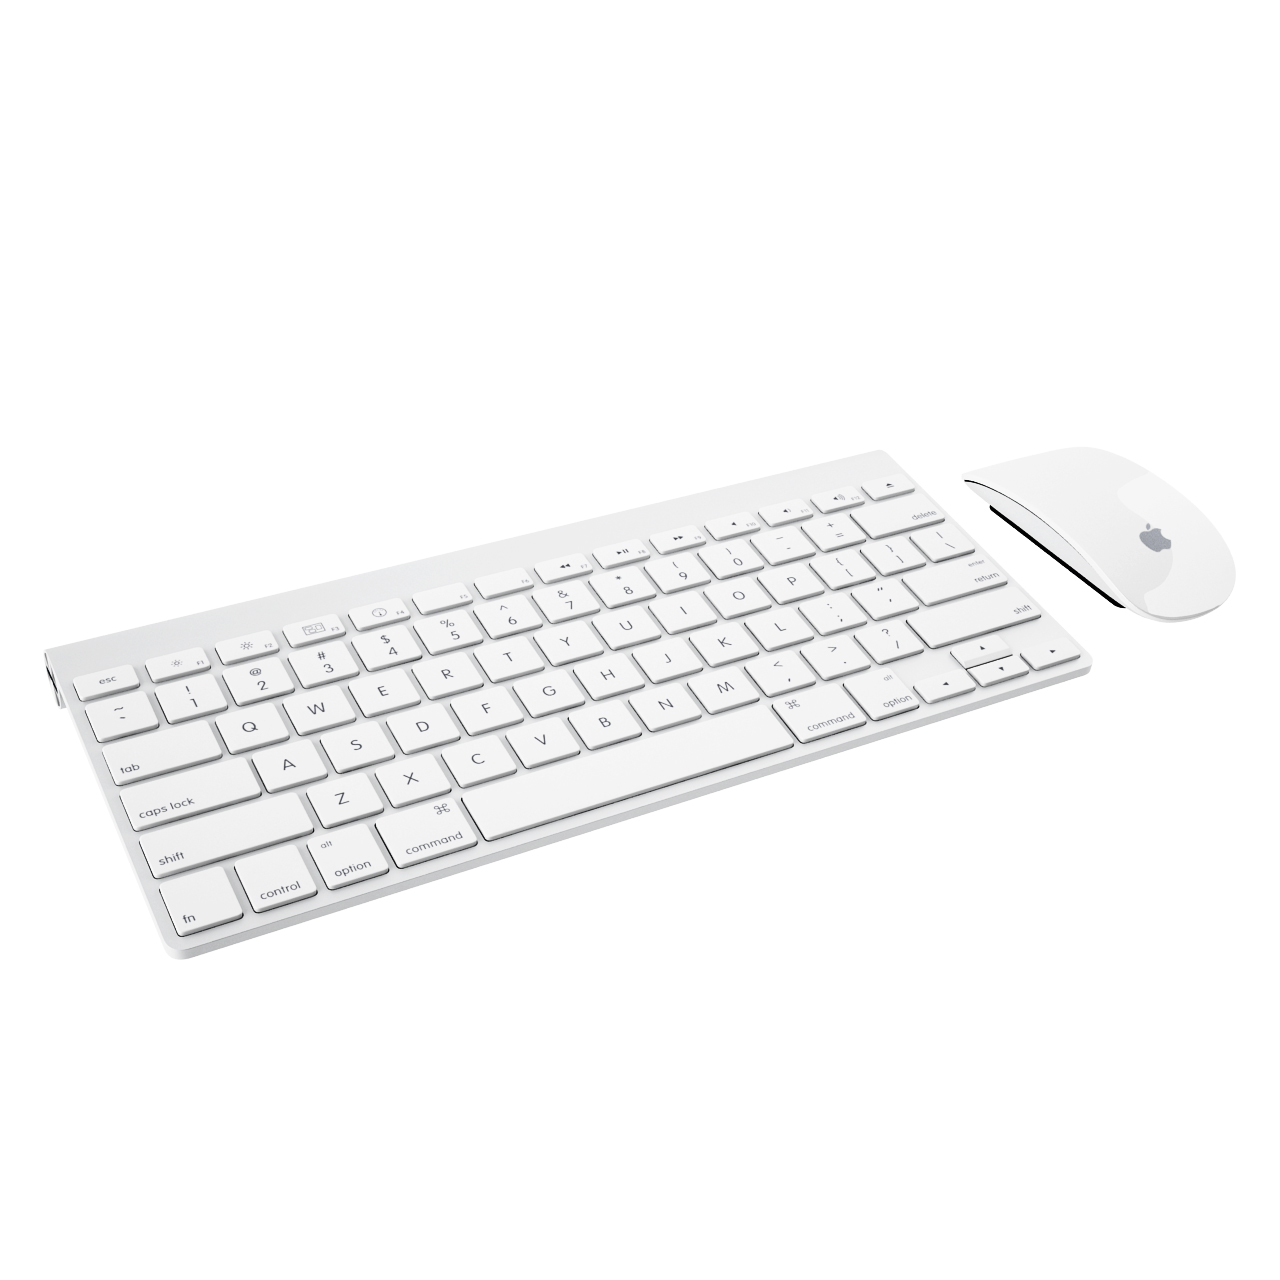 keyboard-magic-mouse-by-apple.jpg